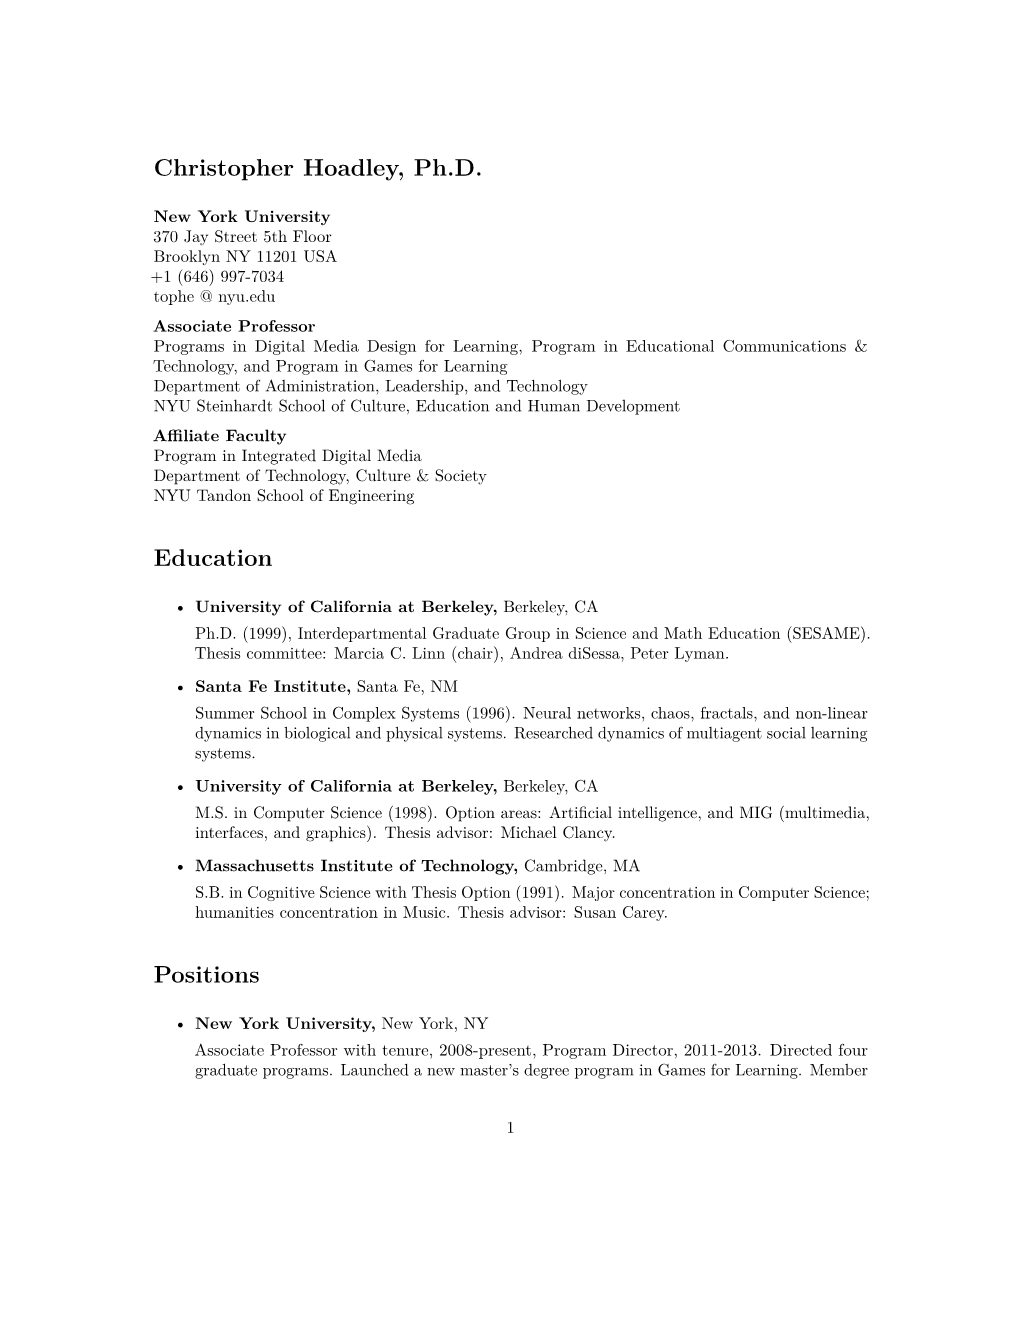 Christopher Hoadley, Ph.D. Education Positions